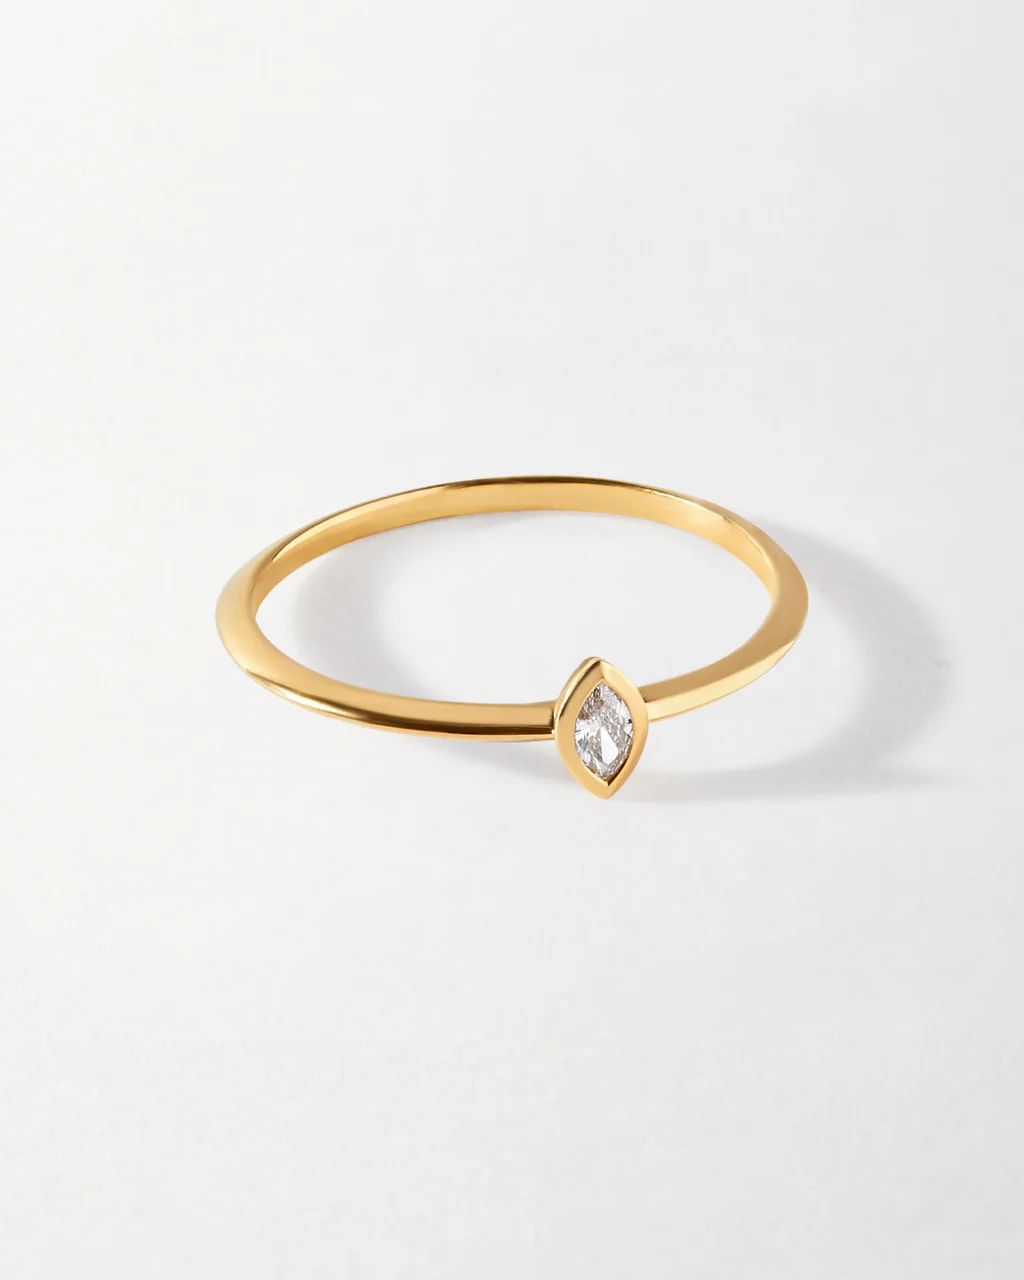 Victoria Marquise Diamond Ring | Edge of Ember Ltd